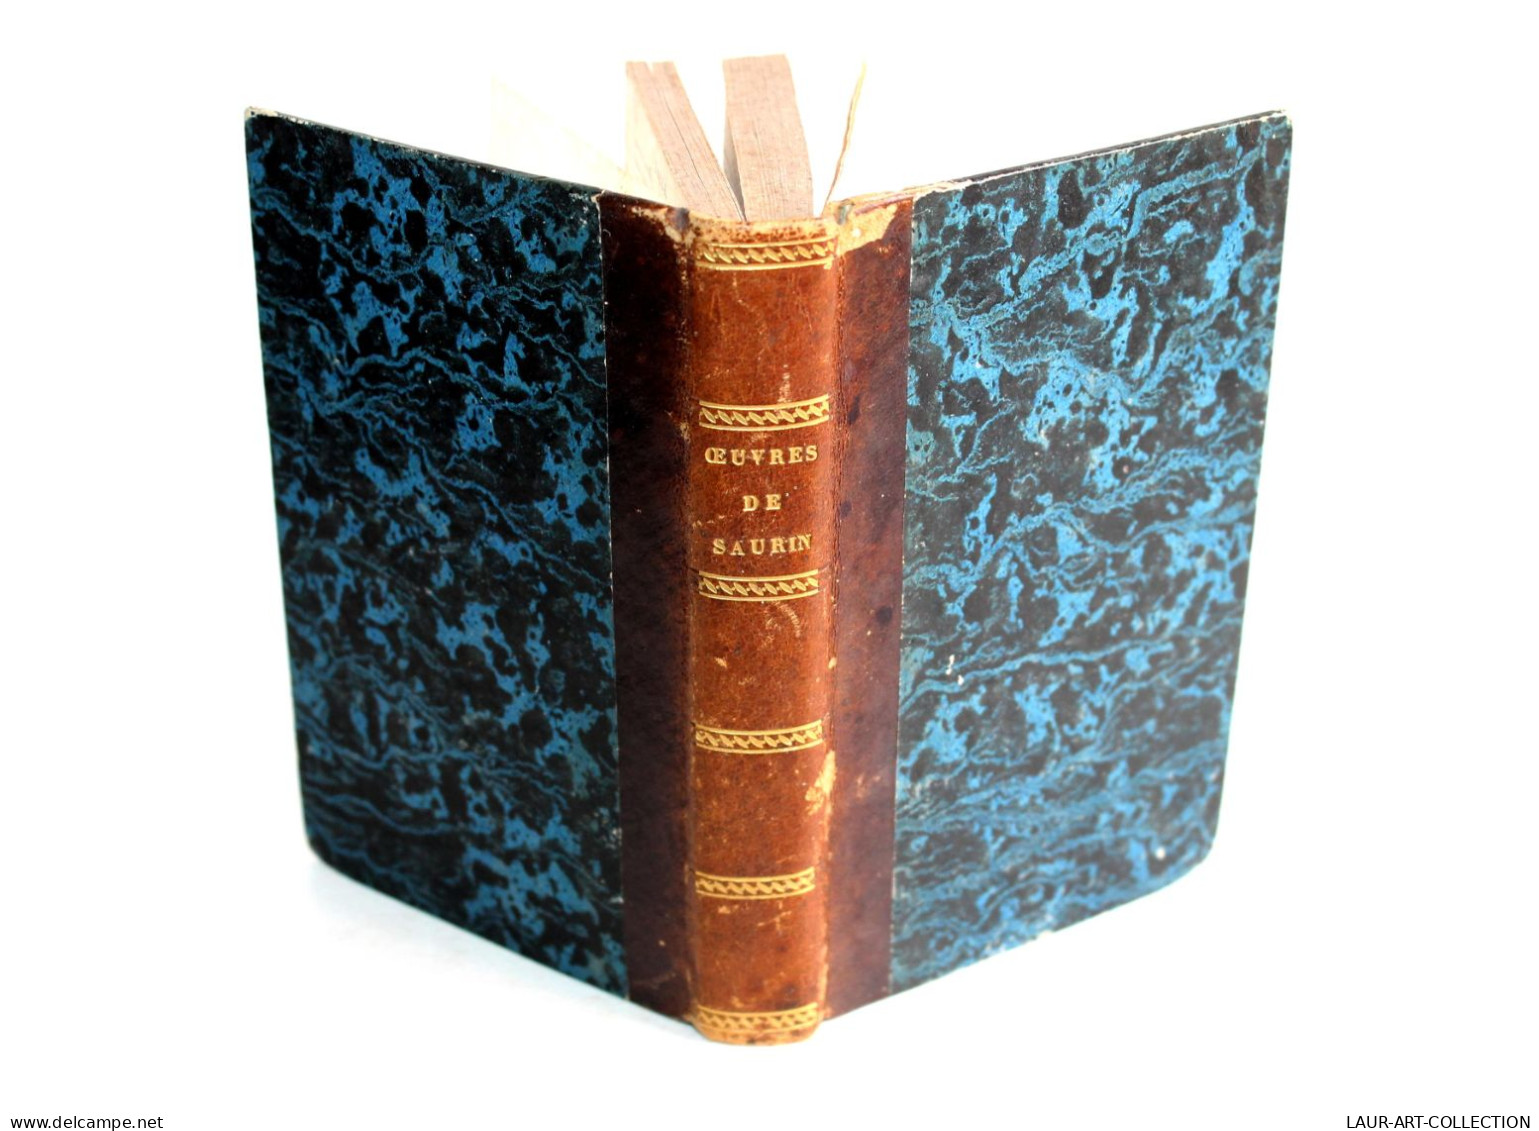 PIECE DE THEATRE OEUVRES CHOISIES DE SAURIN EDITION STEREOTYPE 1820 FIRMIN DIDOT / ANCIEN LIVRE XIXe SIECLE (1803.100) - Franse Schrijvers